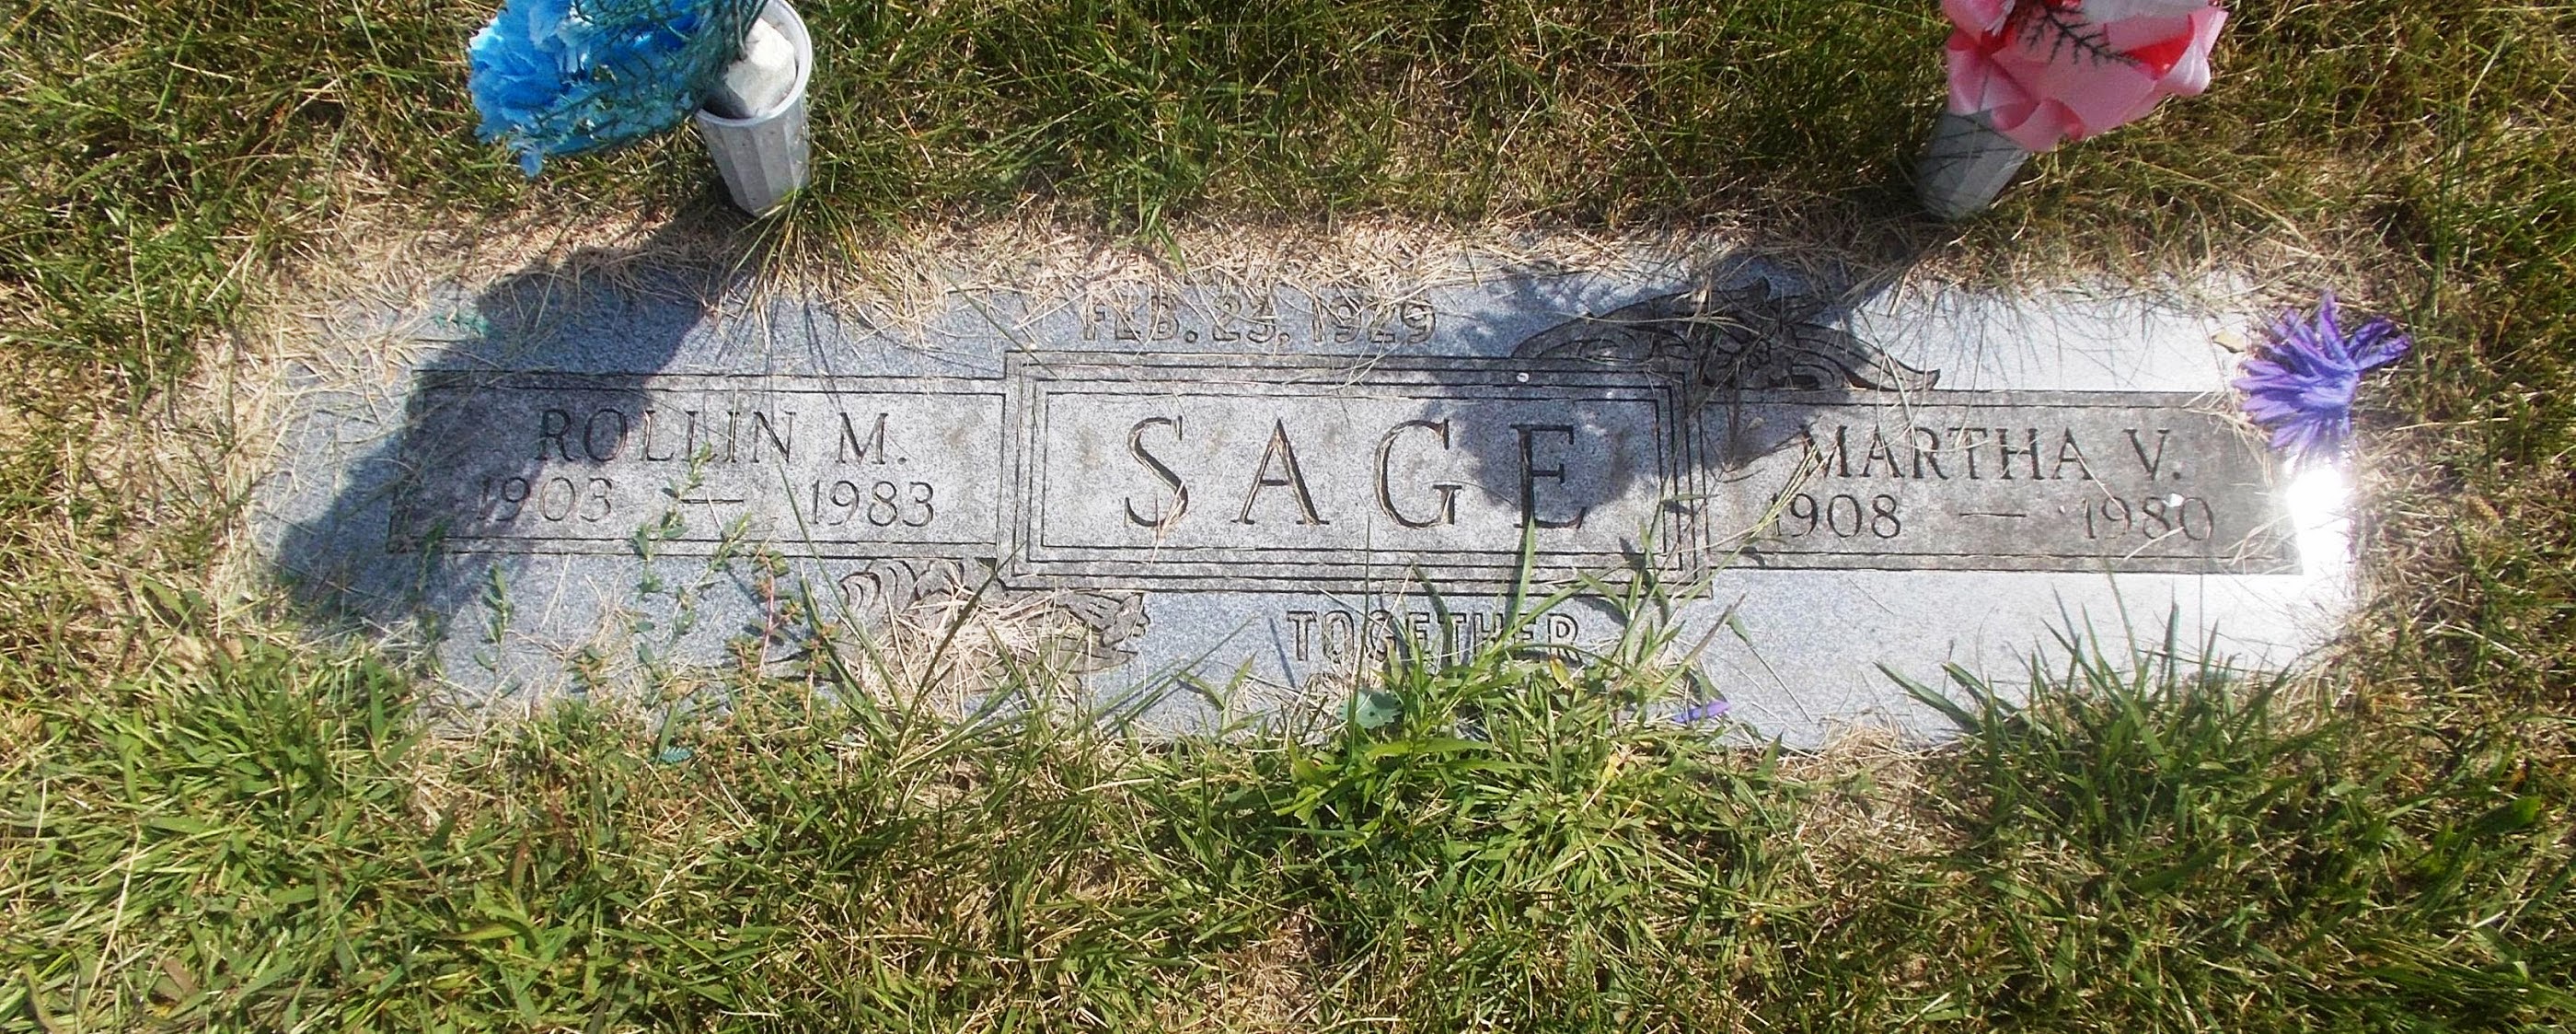 Martha V Sage